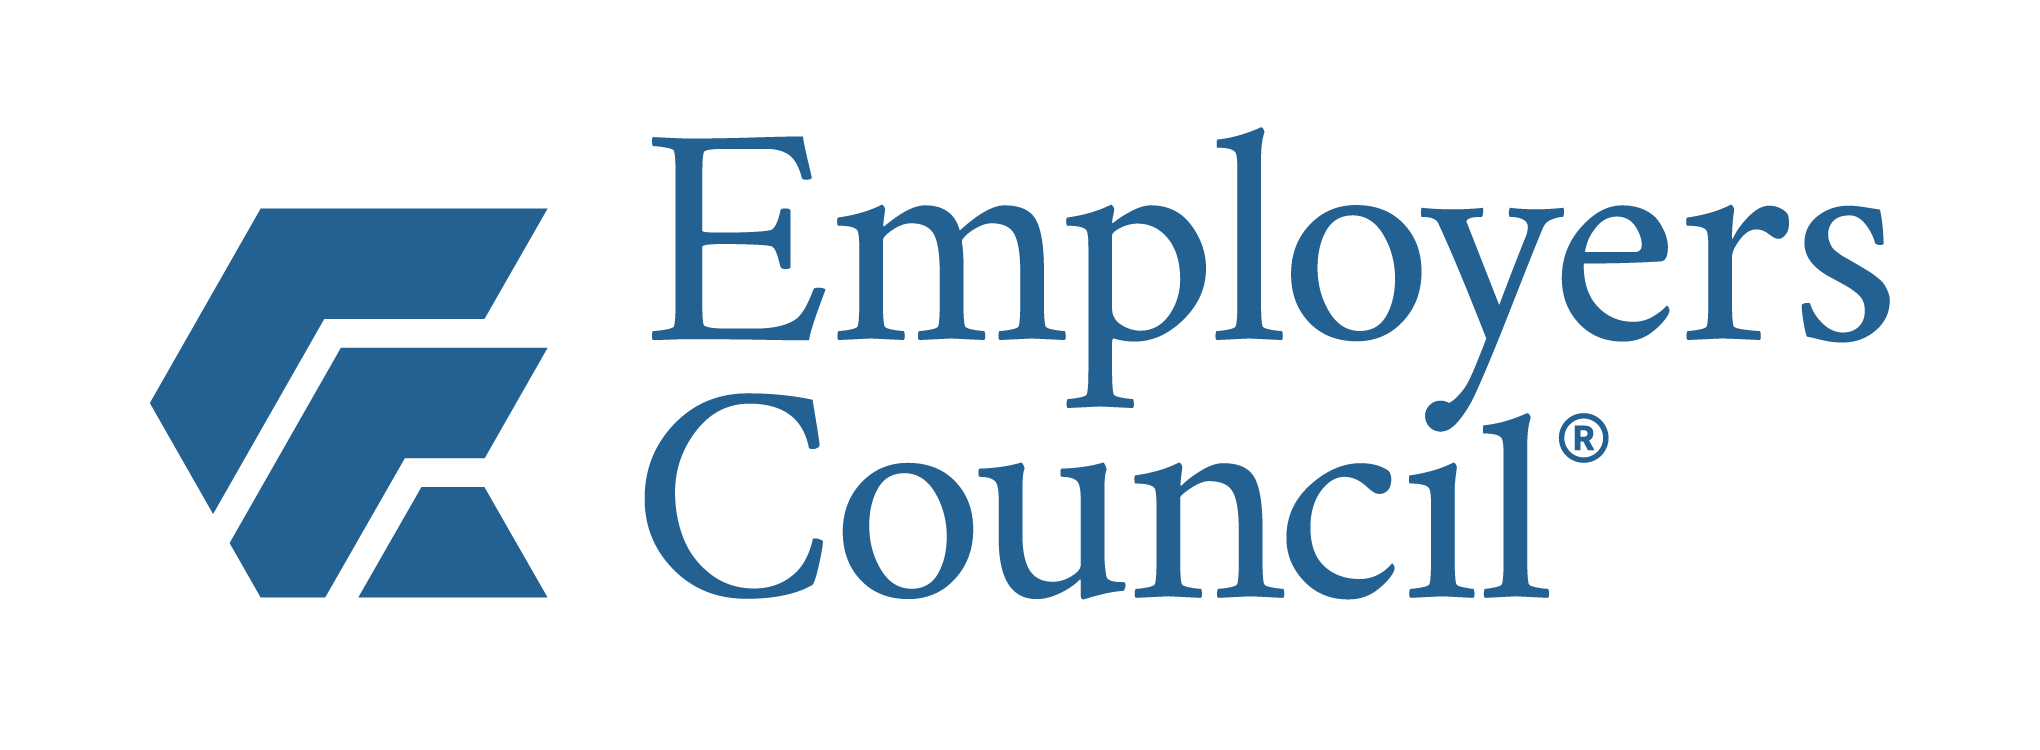 Employers Council: Target Segmentation Study